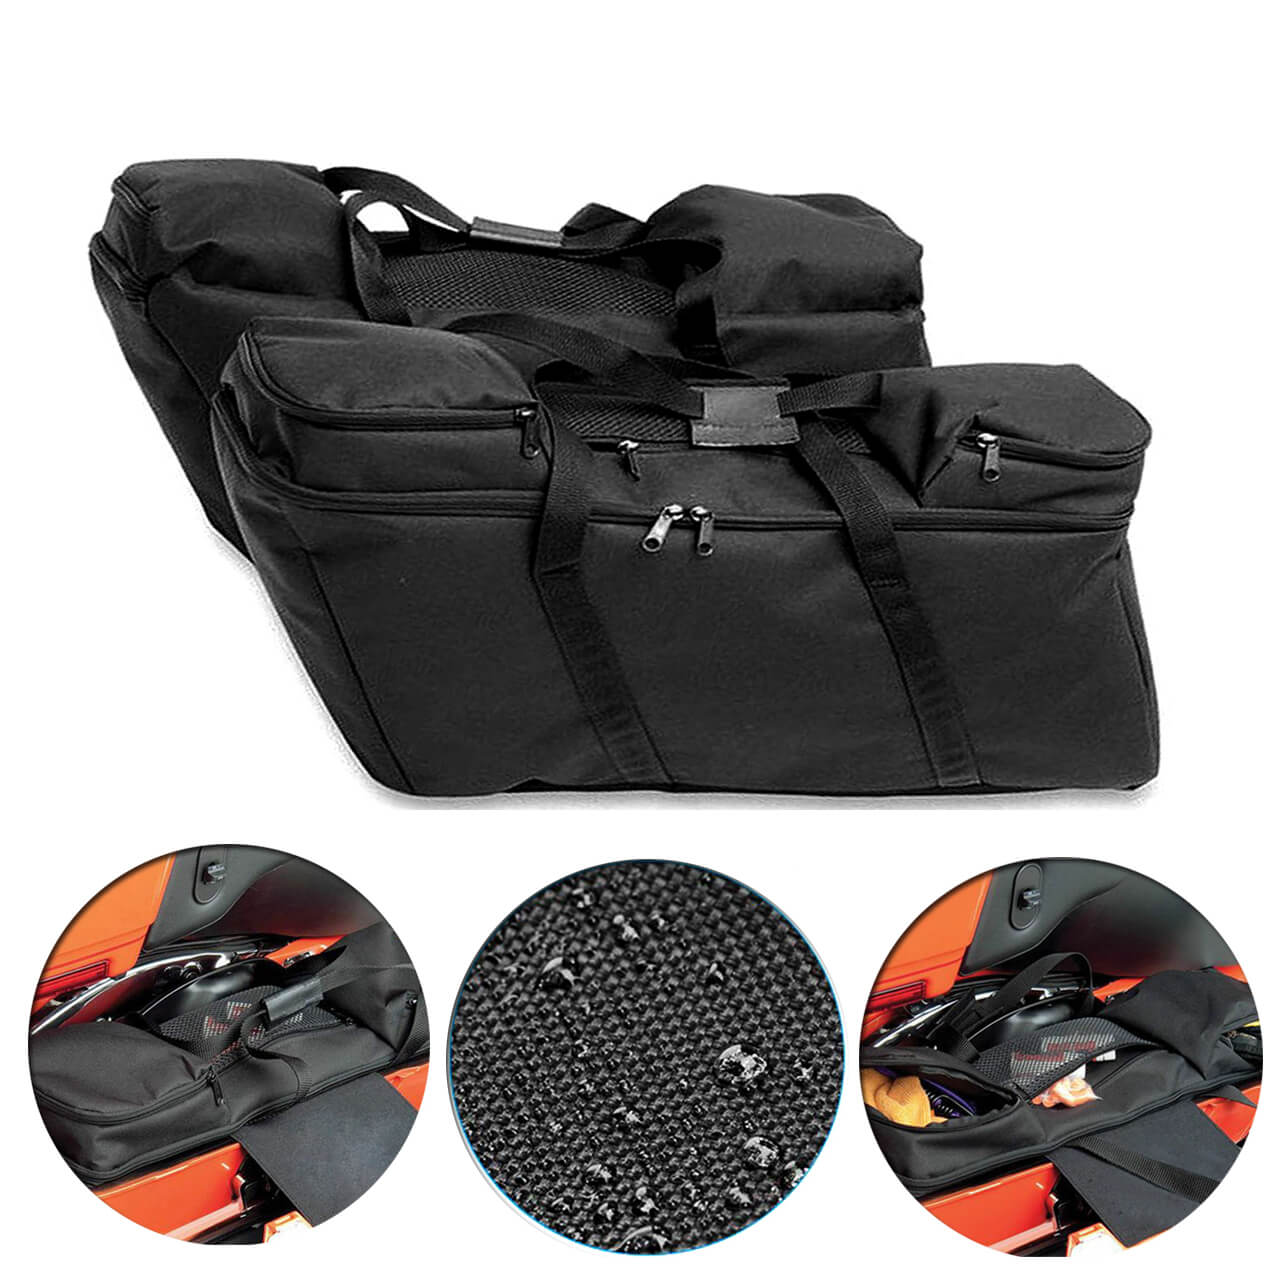 Mactions waterproof saddlebag liners for Harley Touring CB006101